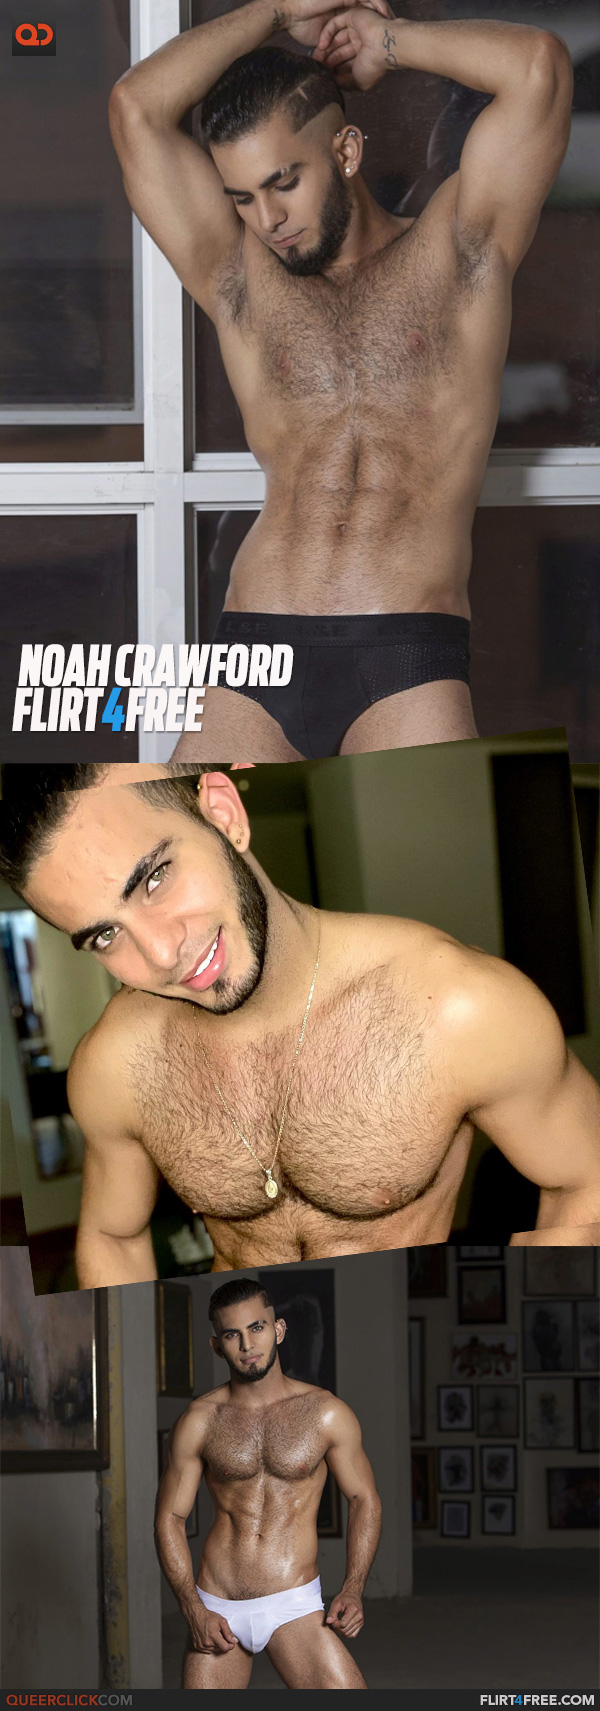 Flirt4Free: Noah Crawford